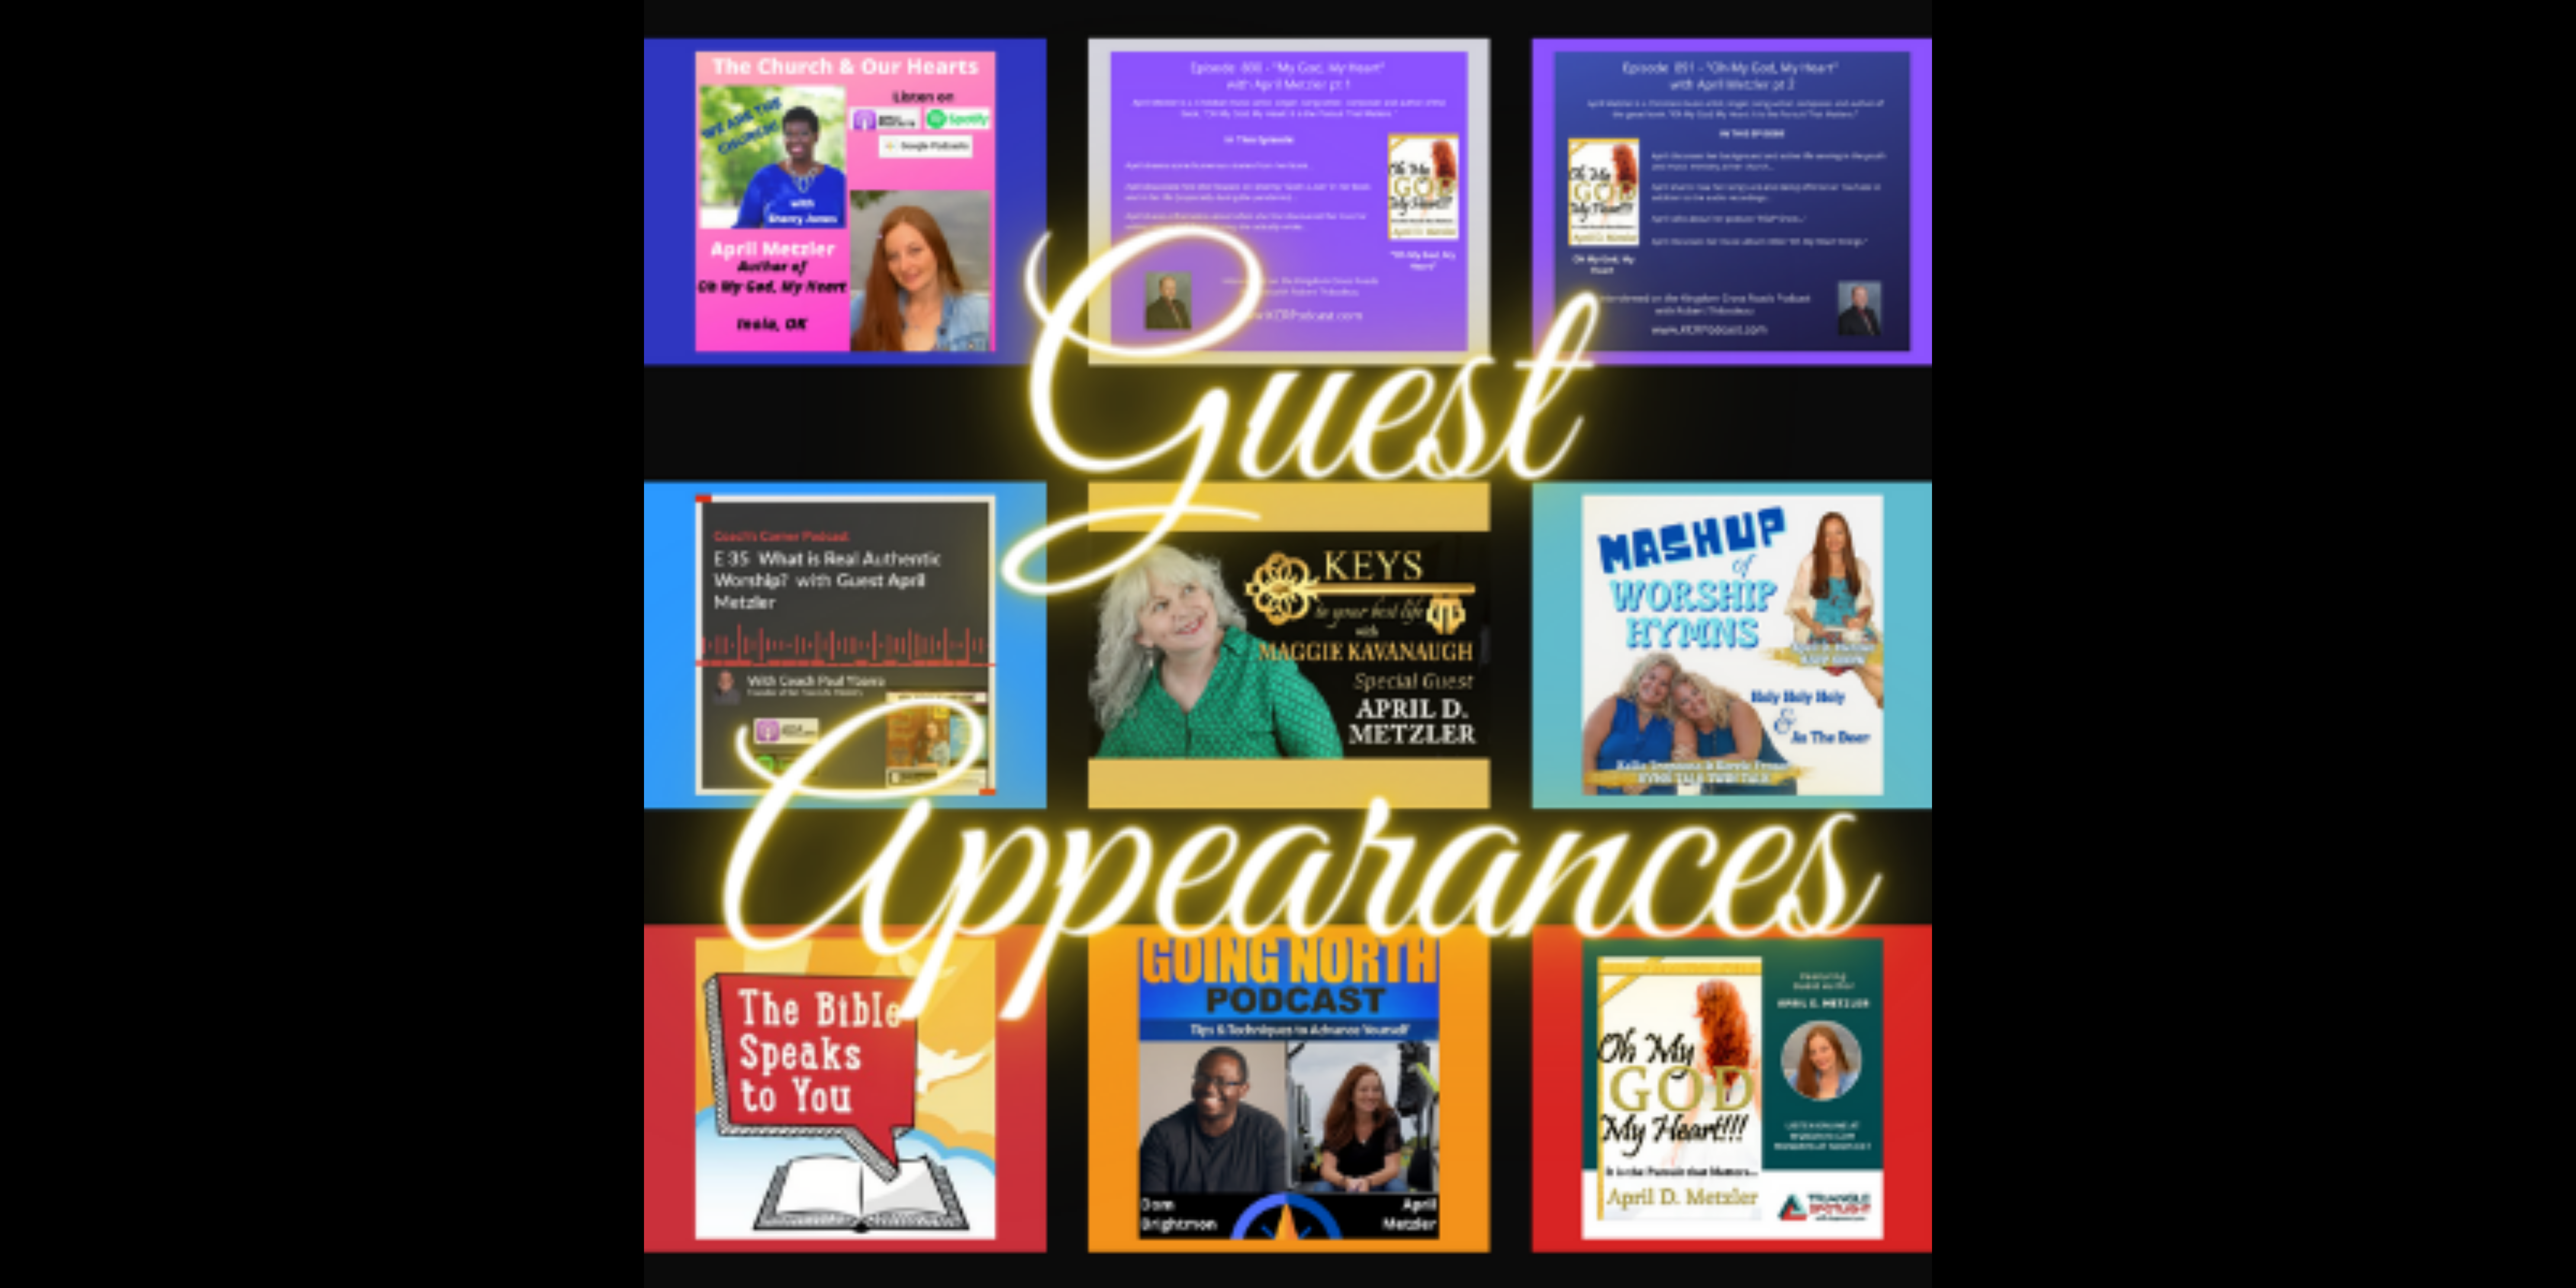 Guest Appearances page header for April D. Metzler